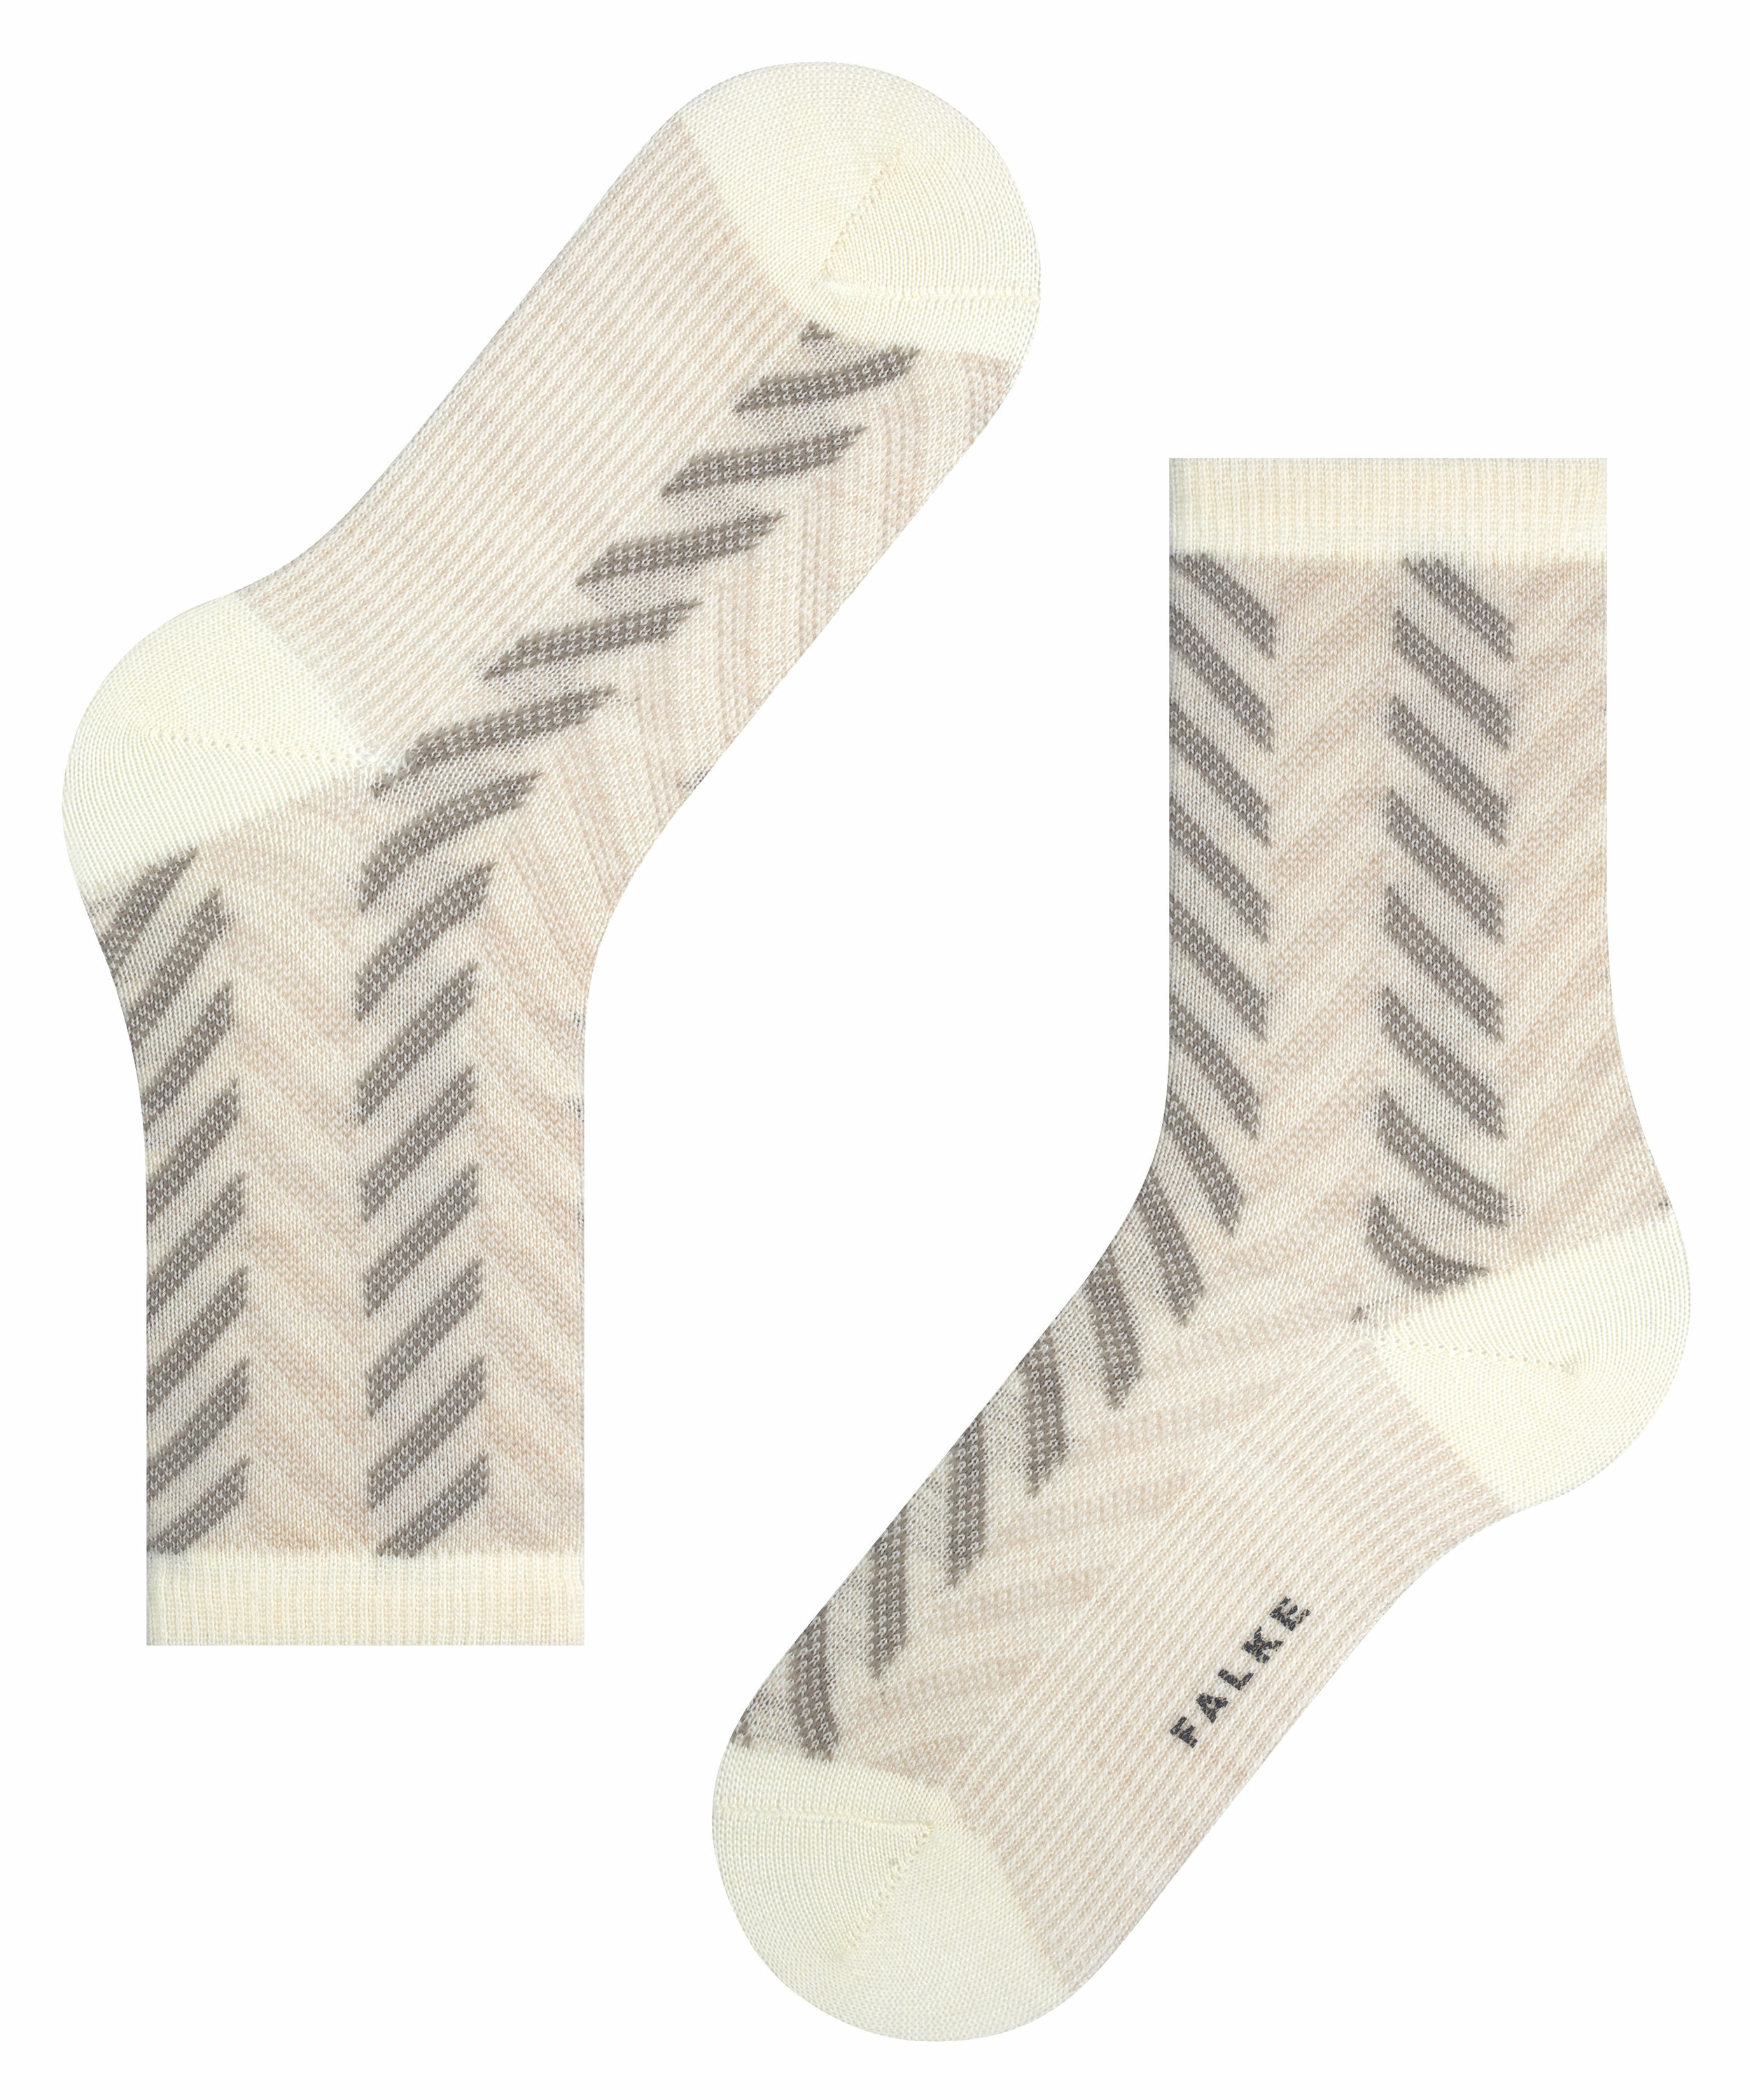 Woll-Socke "Arrow" mit Fischgrad-Muster